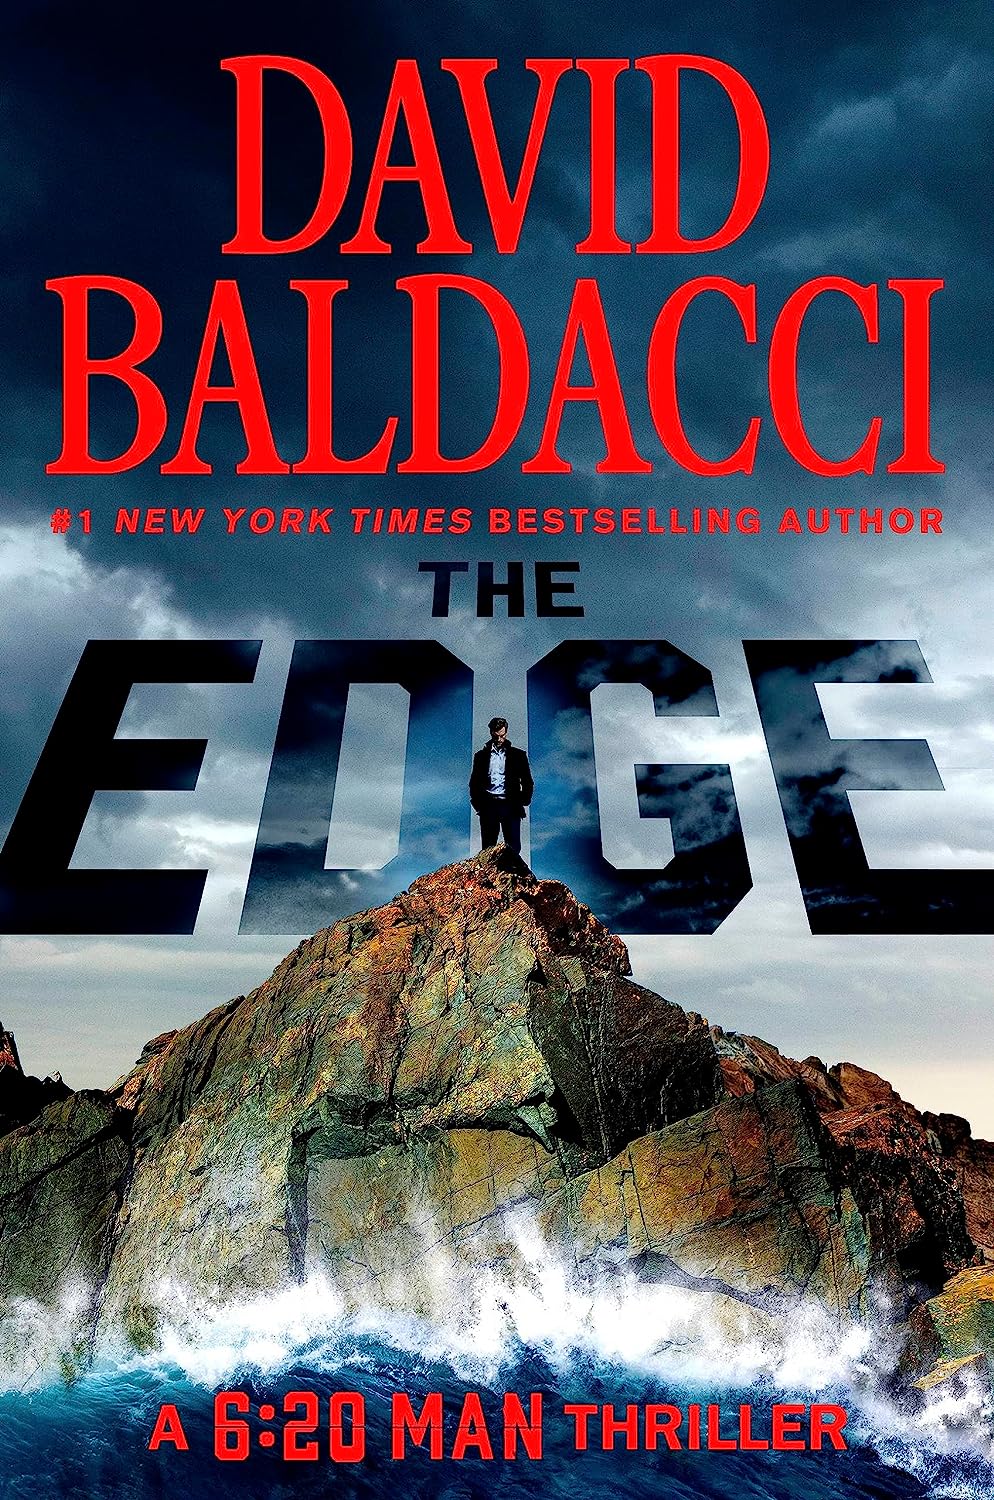 The Edge (6:20 Man #2) - by David Baldacci (Hardcover)